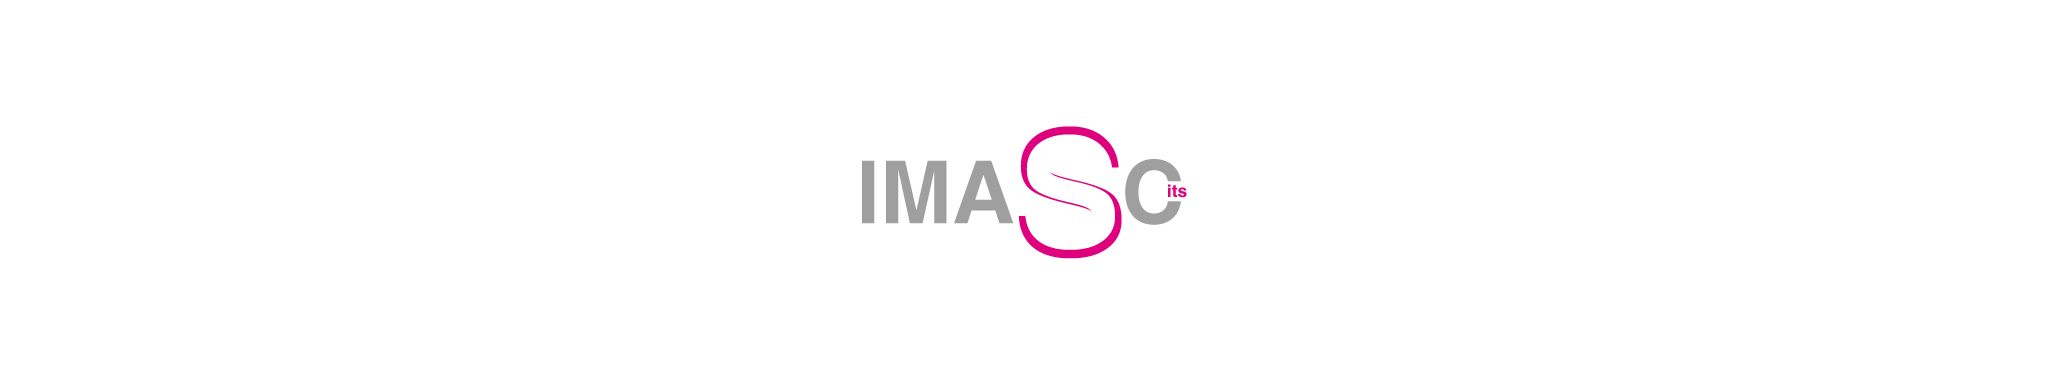 IMASCits Company's profile banner